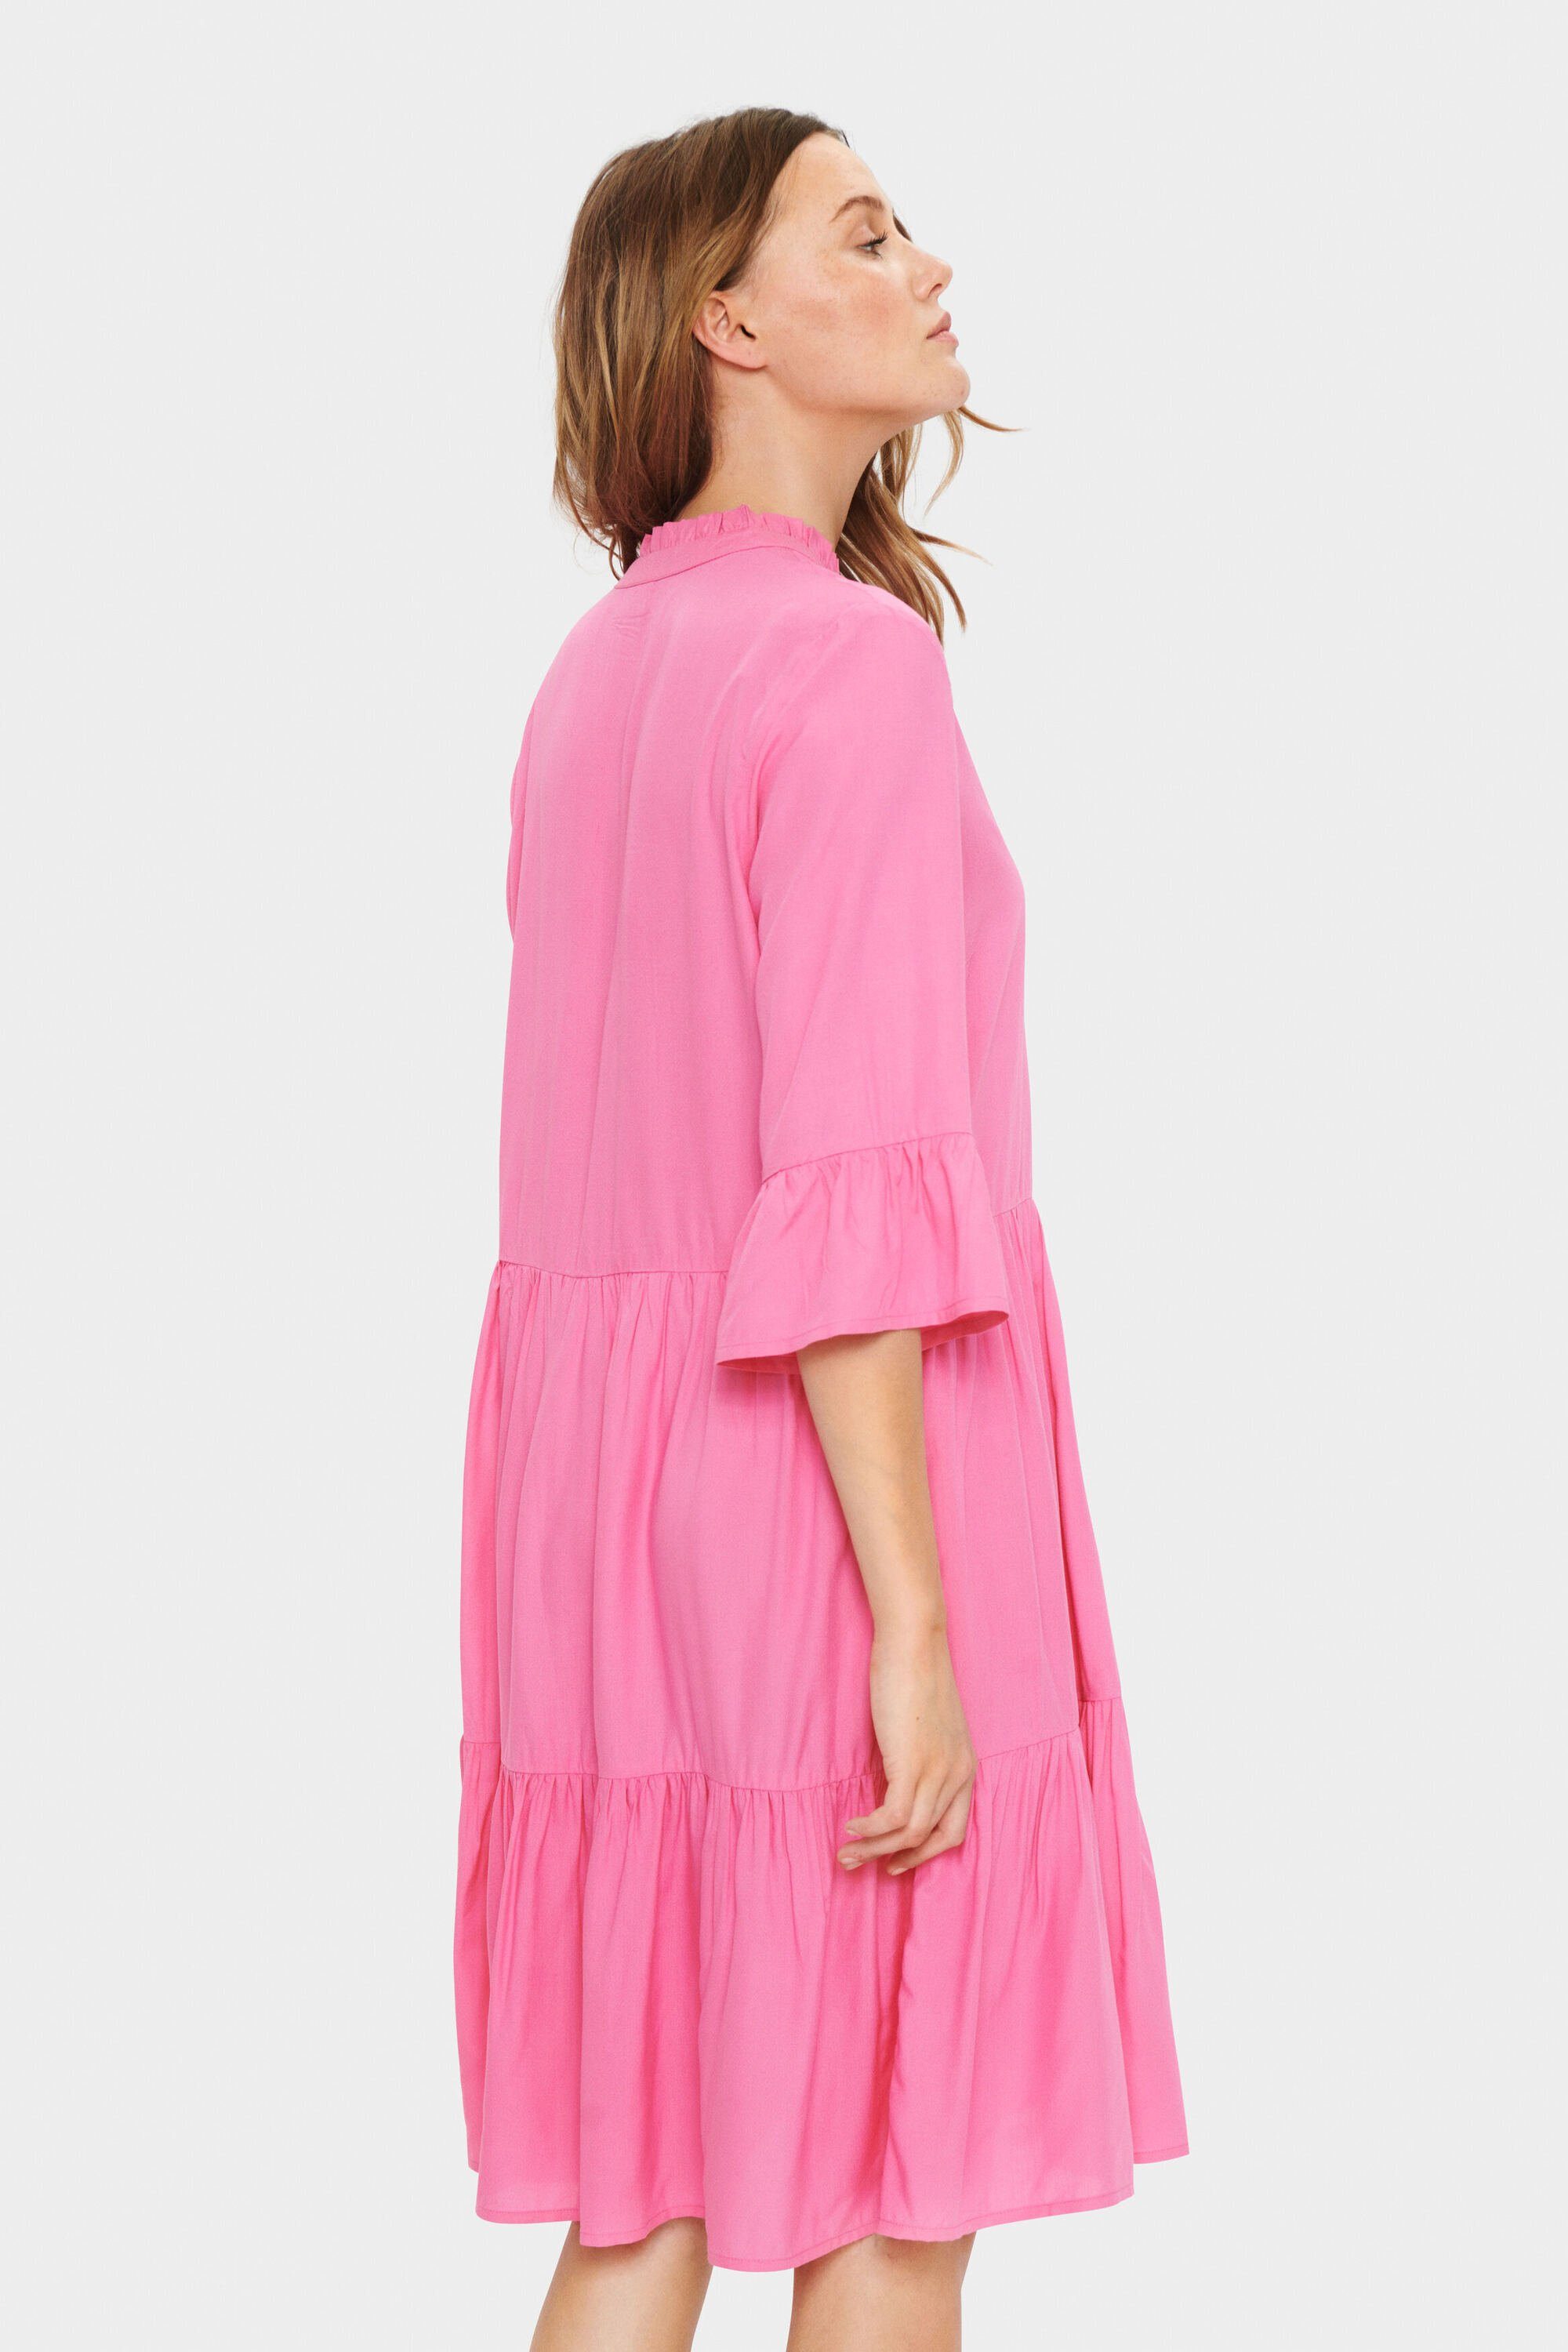 Tropez Azalea Saint EdaSZ Jerseykleid Kleid Pink